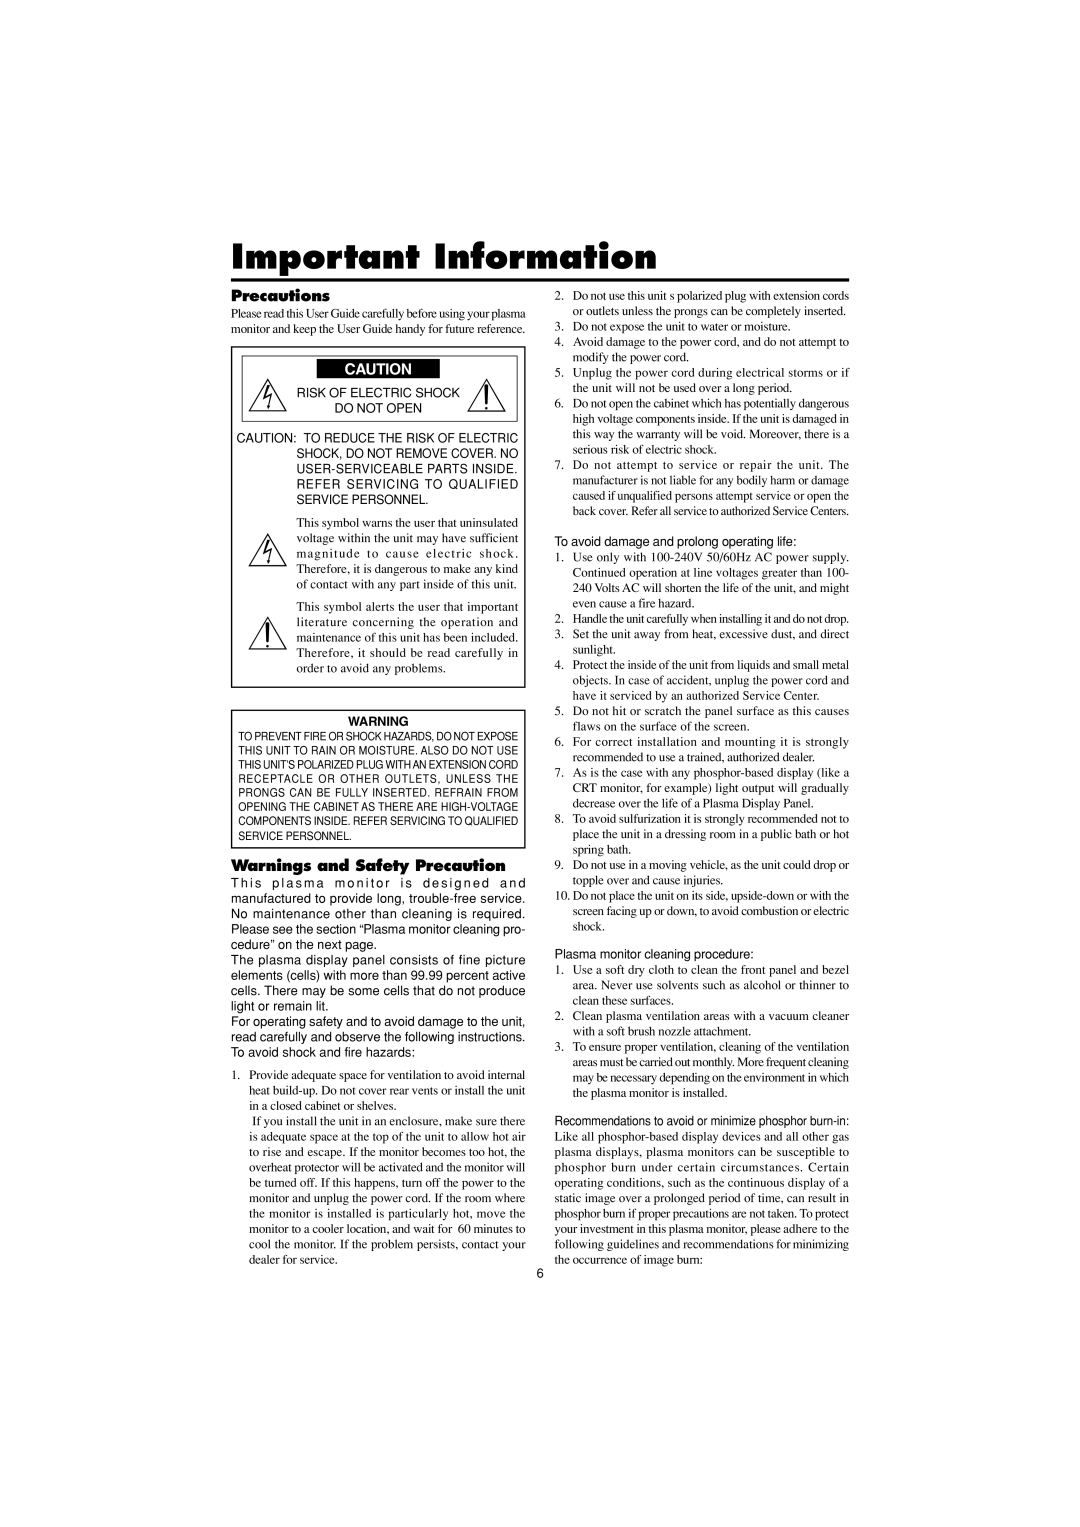 Marantz PD6150D manual Precautions, Warnings and Safety Precaution, Important Information 